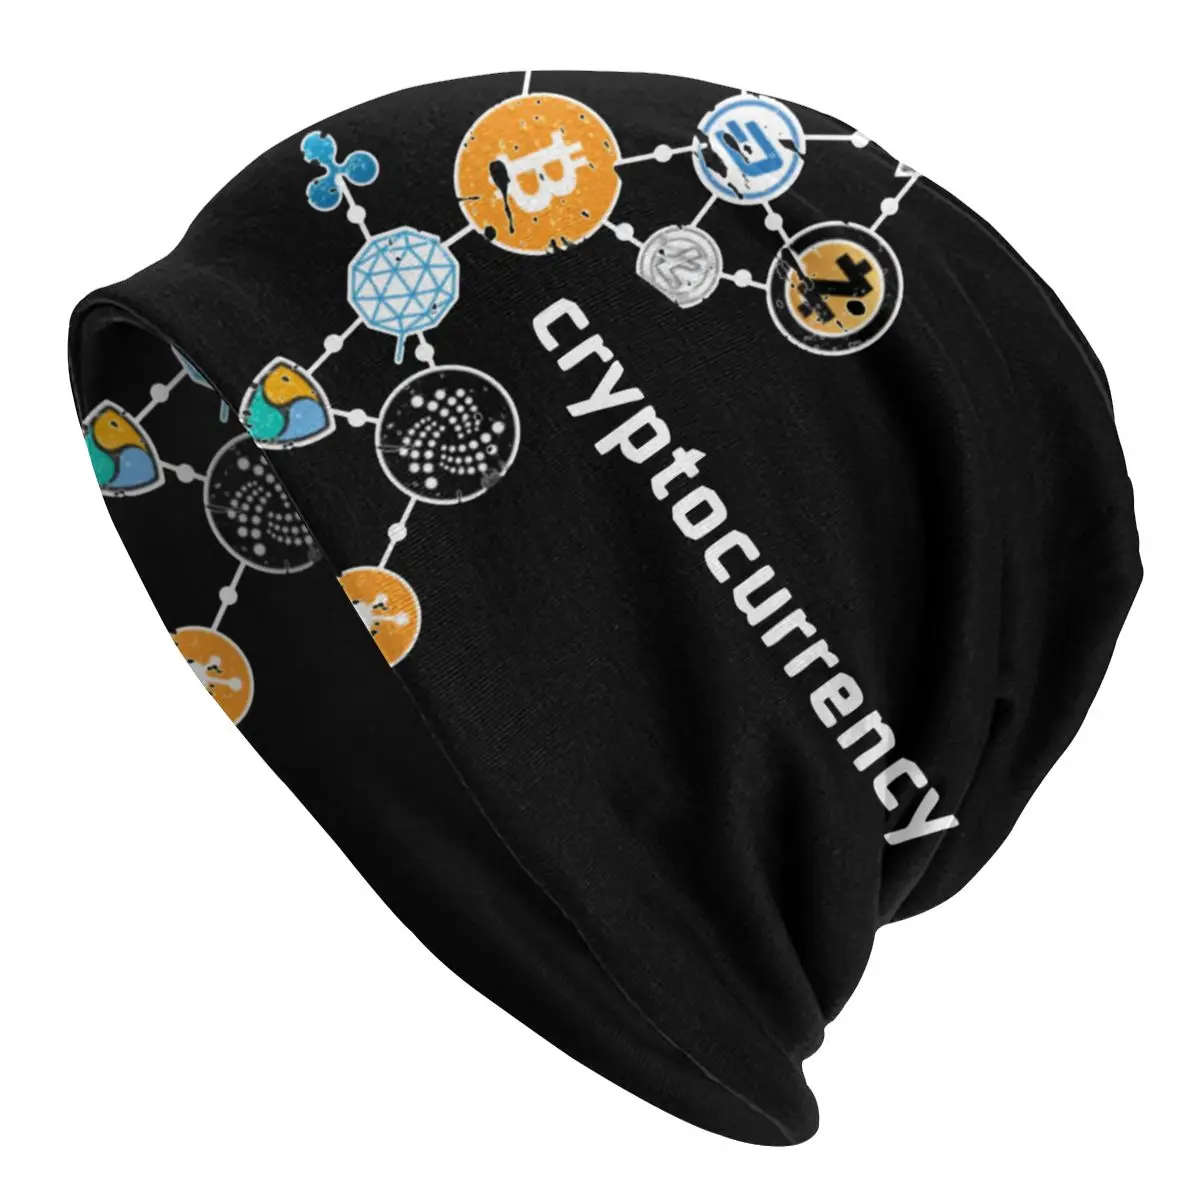 

Cryptocurrency Bonnet Hat Knitted Hat Skullies Beanies Hats Bitcoin Crypto Btc Blockchain Geek Men's Women's Warm Dual-use Cap